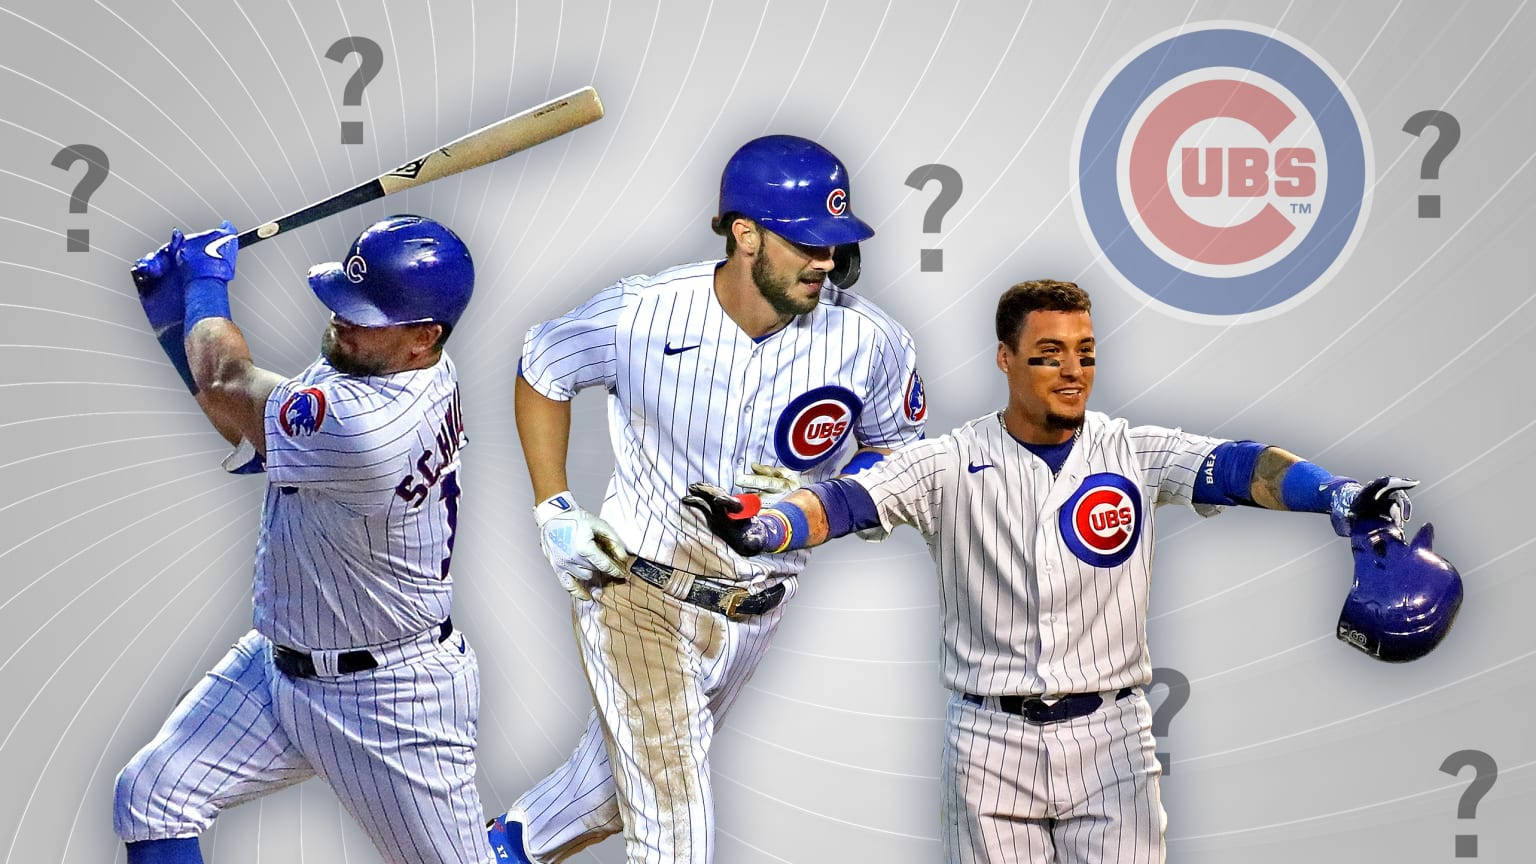 javier baez cool wallpaper - Google Search  Cubs baseball, Chicago cubs  baseball, Cubs fan